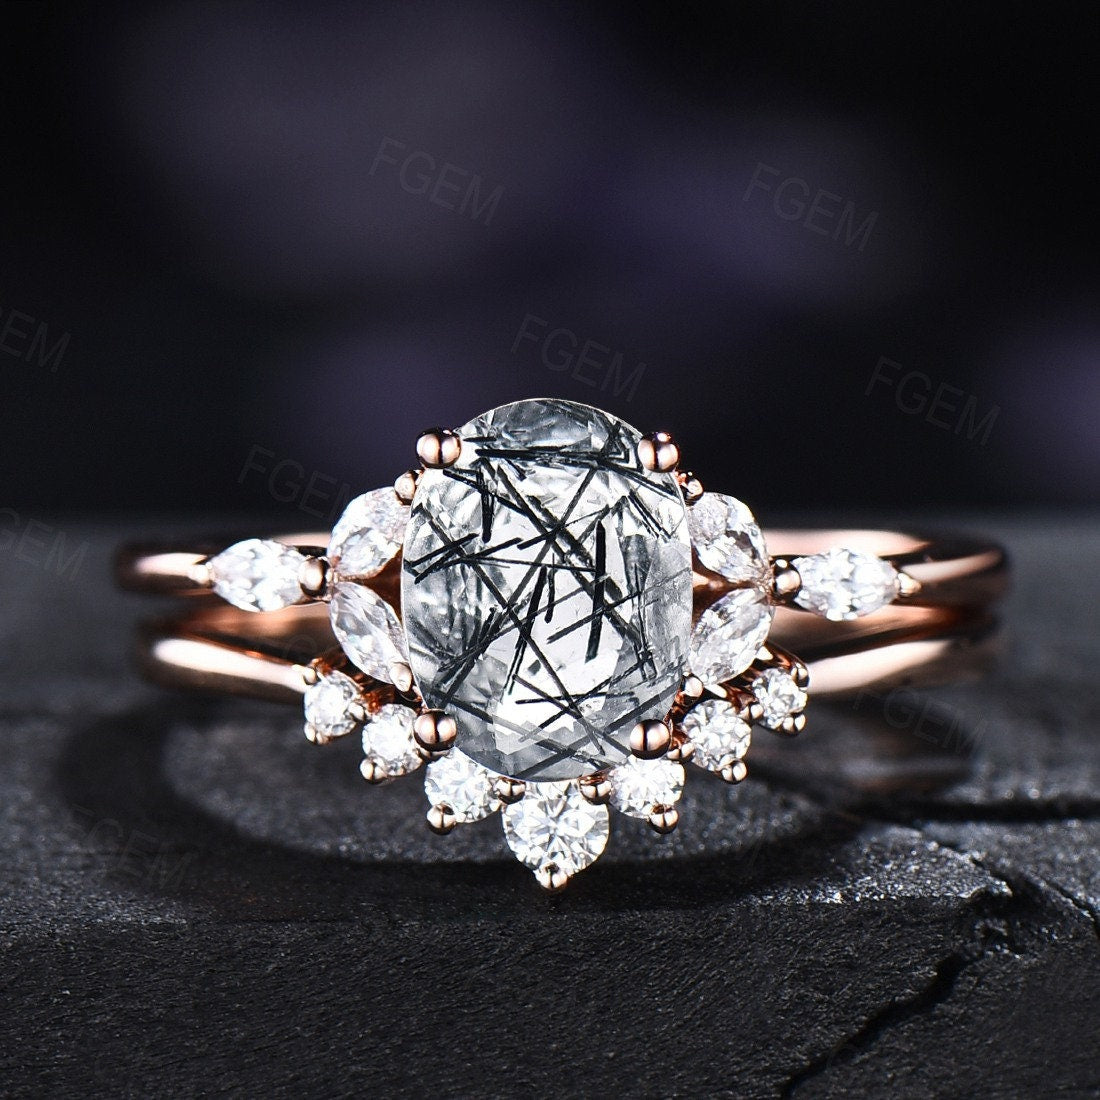 My Smokey quartz and labradorite engagement ring : r/EngagementRings